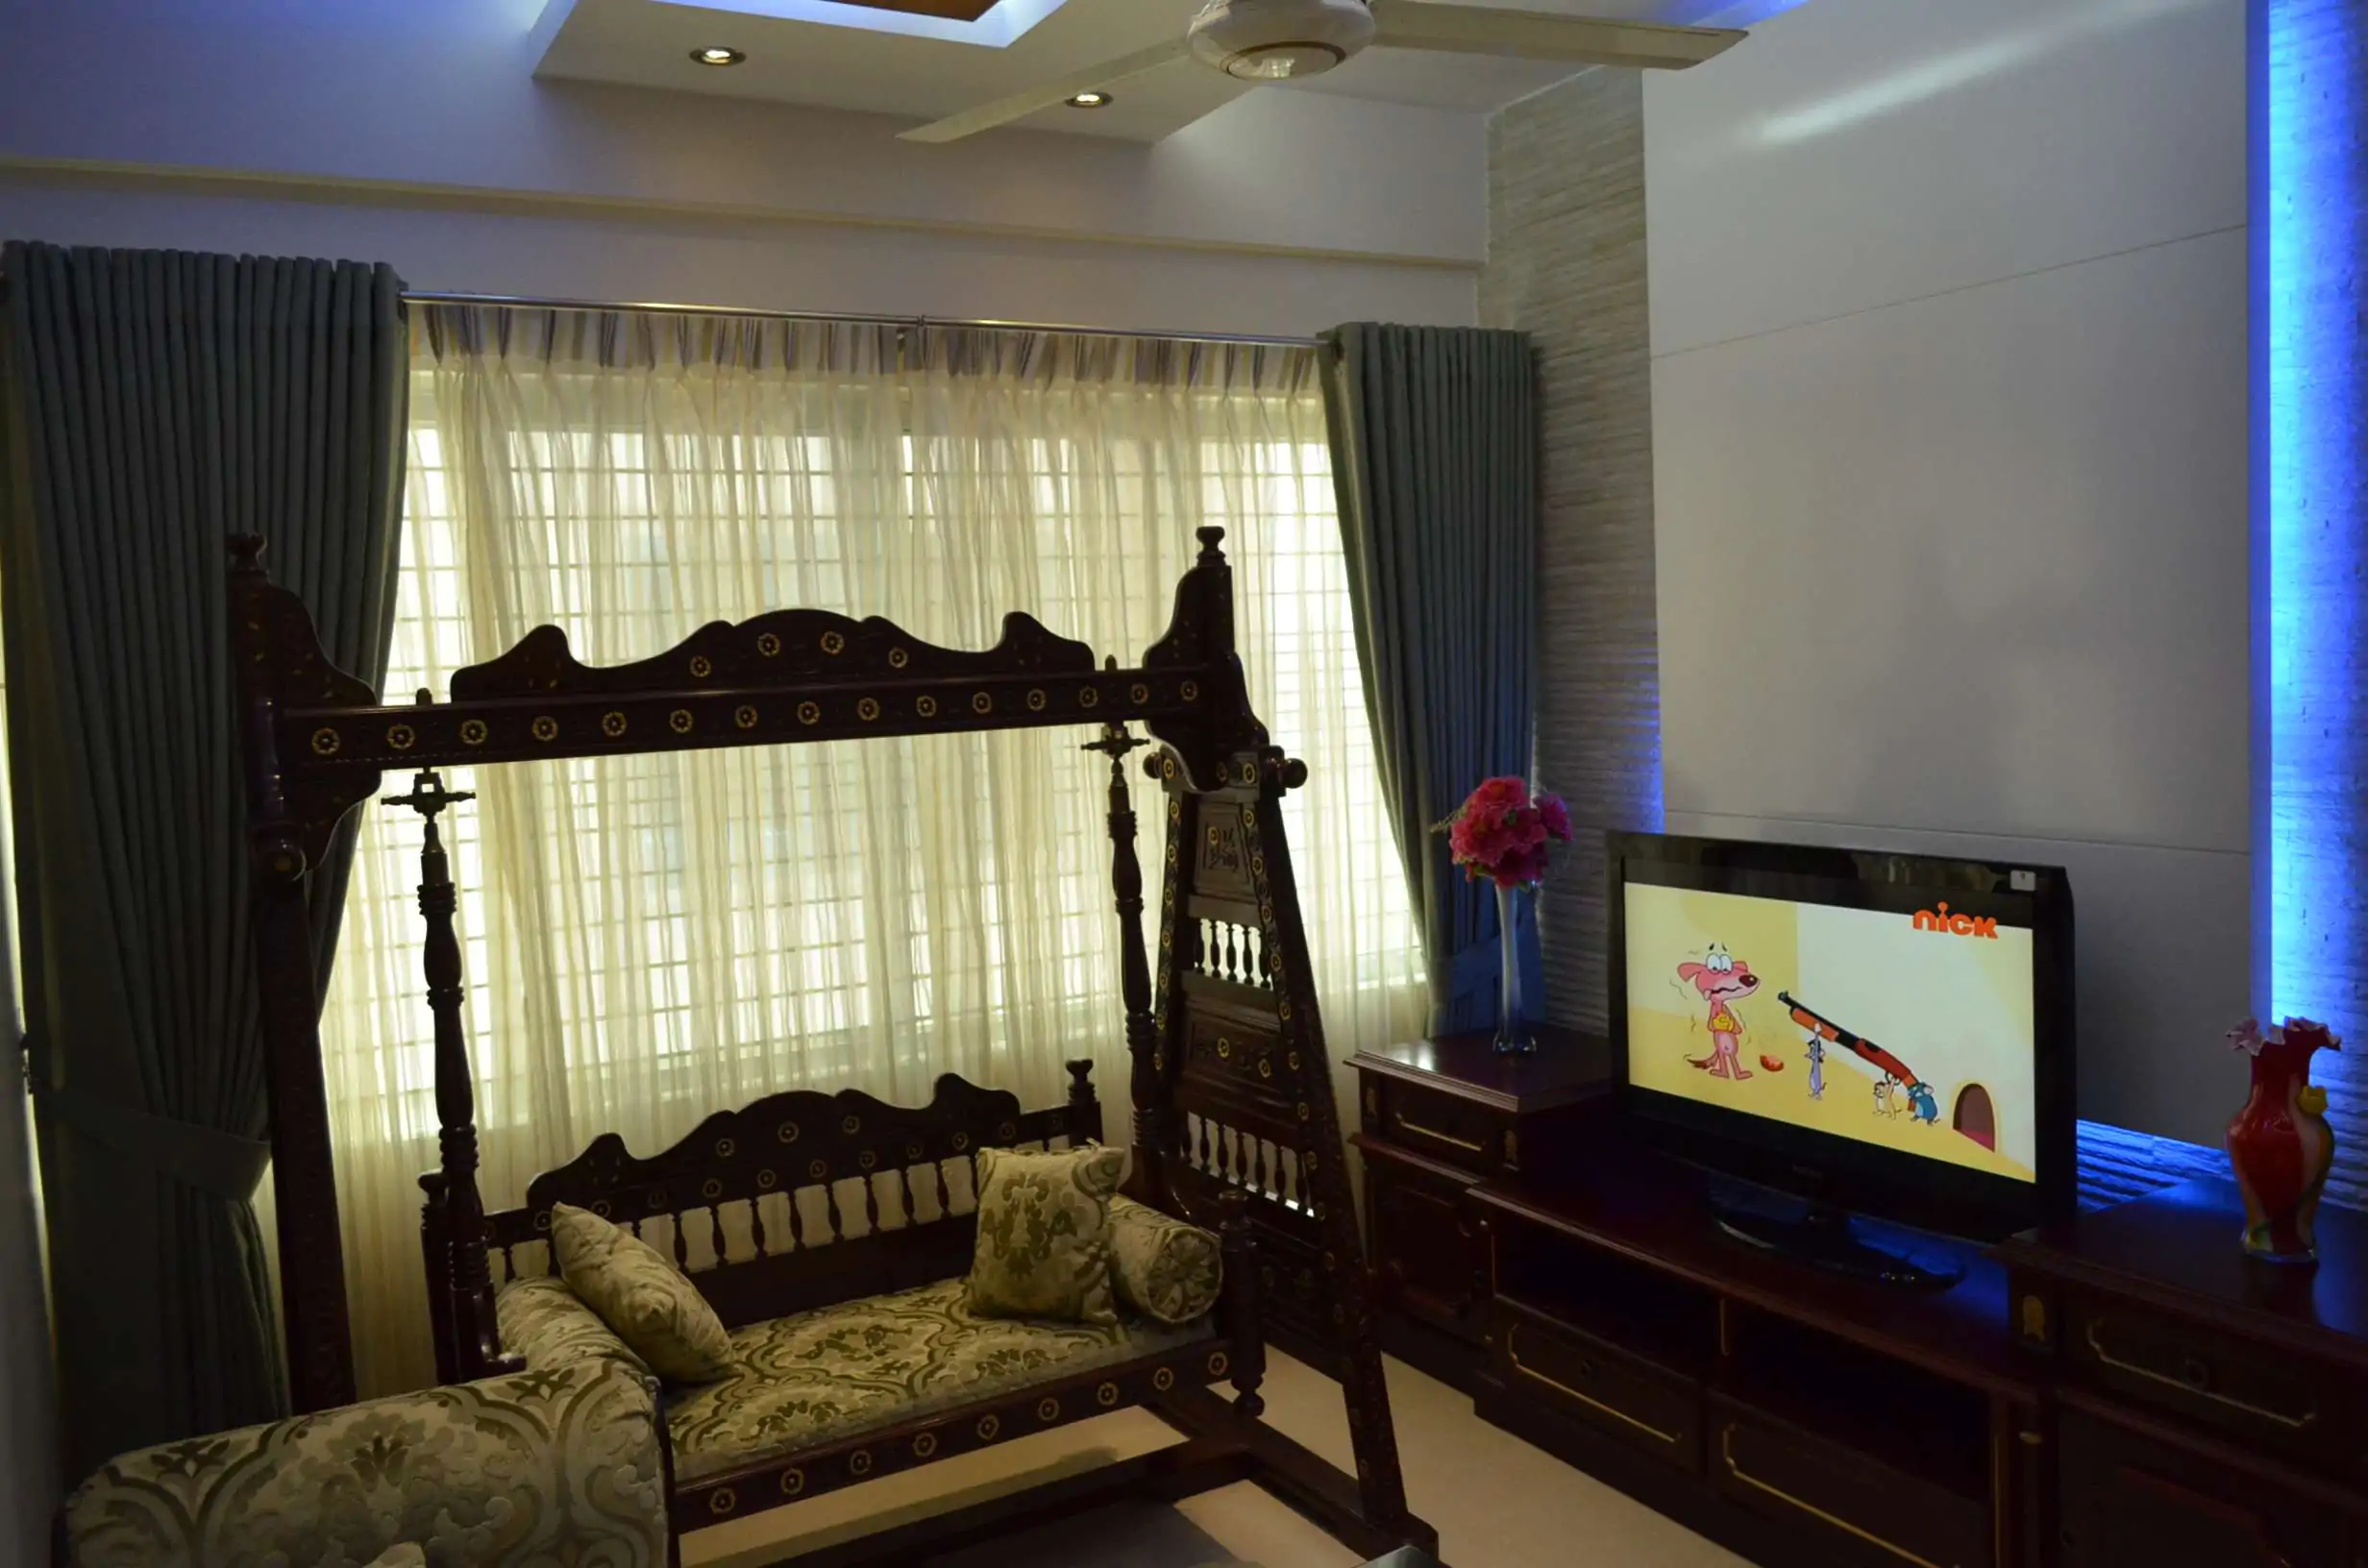 Masud Alam Dhanmondi Complete Project Foyer Interior Design (12)